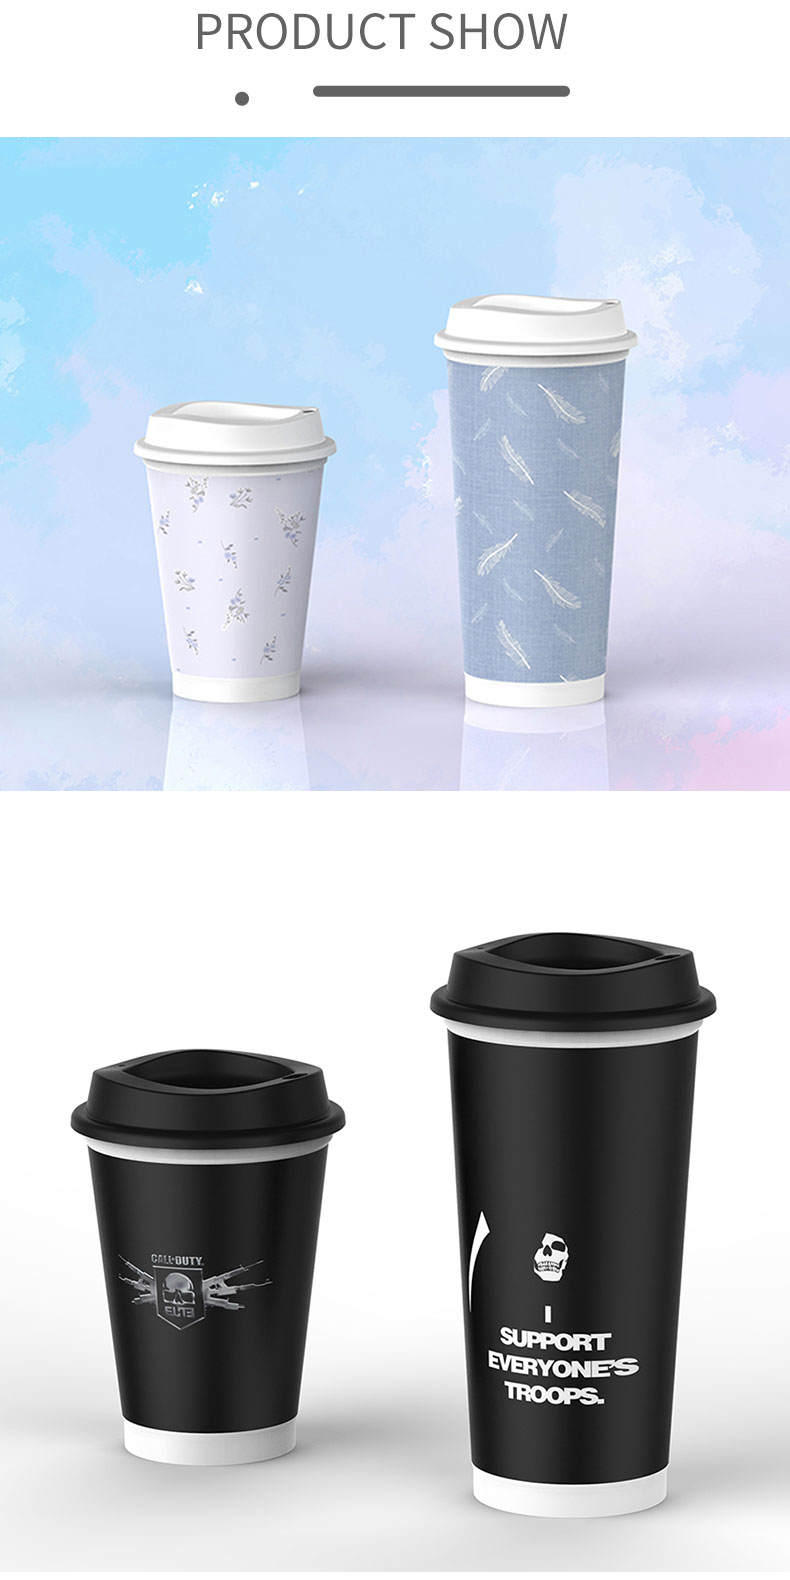 Eco friendly reusable cups